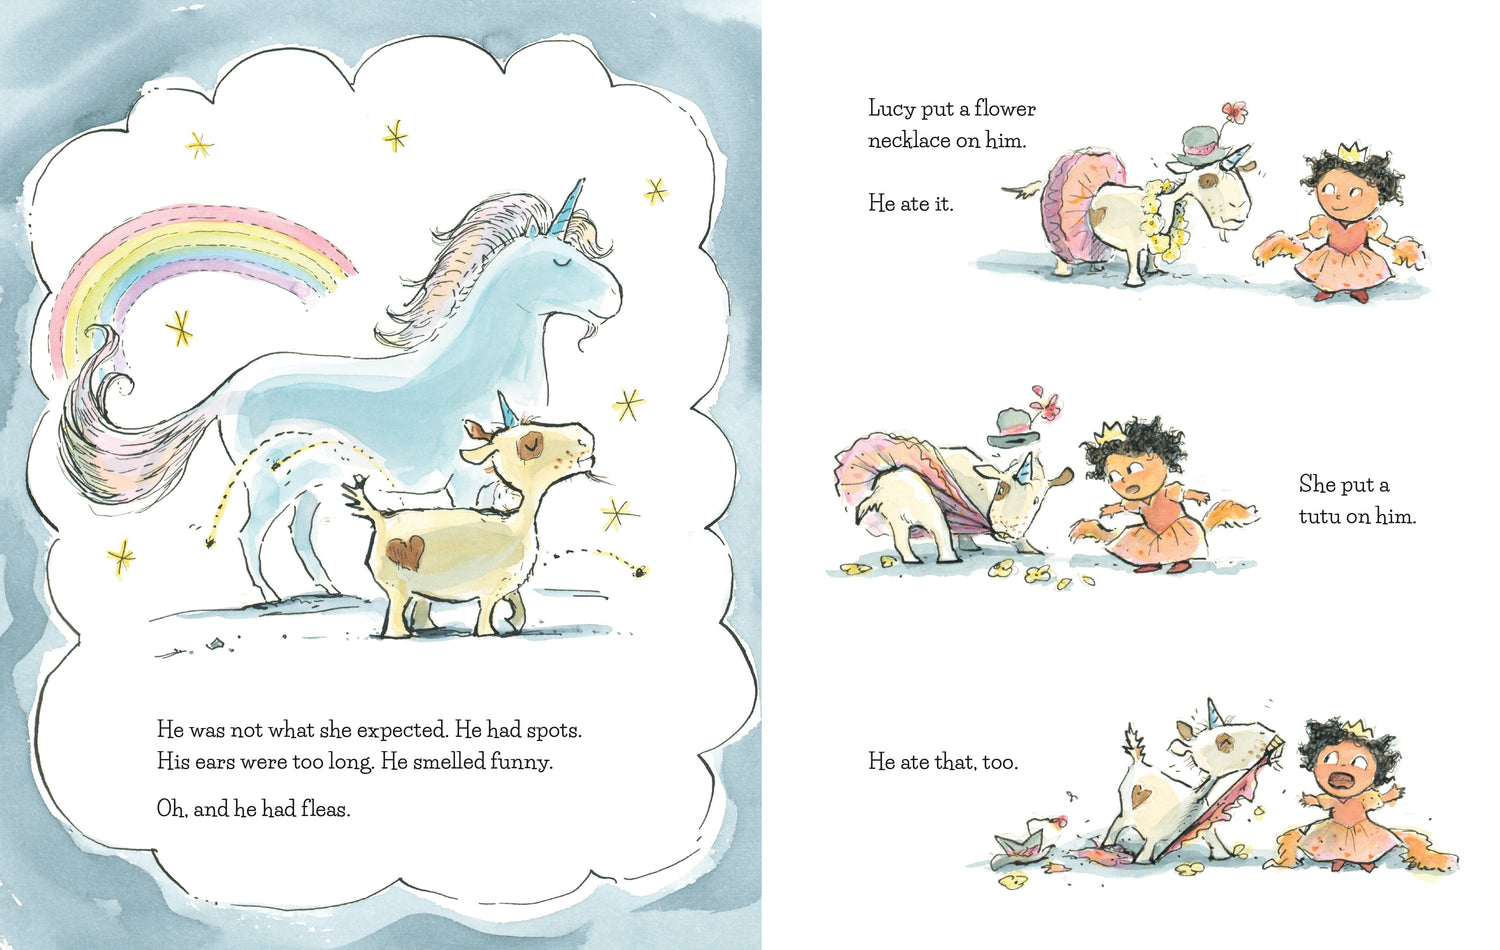 A Unicorn Named Sparkle 192 GIFT CHILD Macmillan Books 